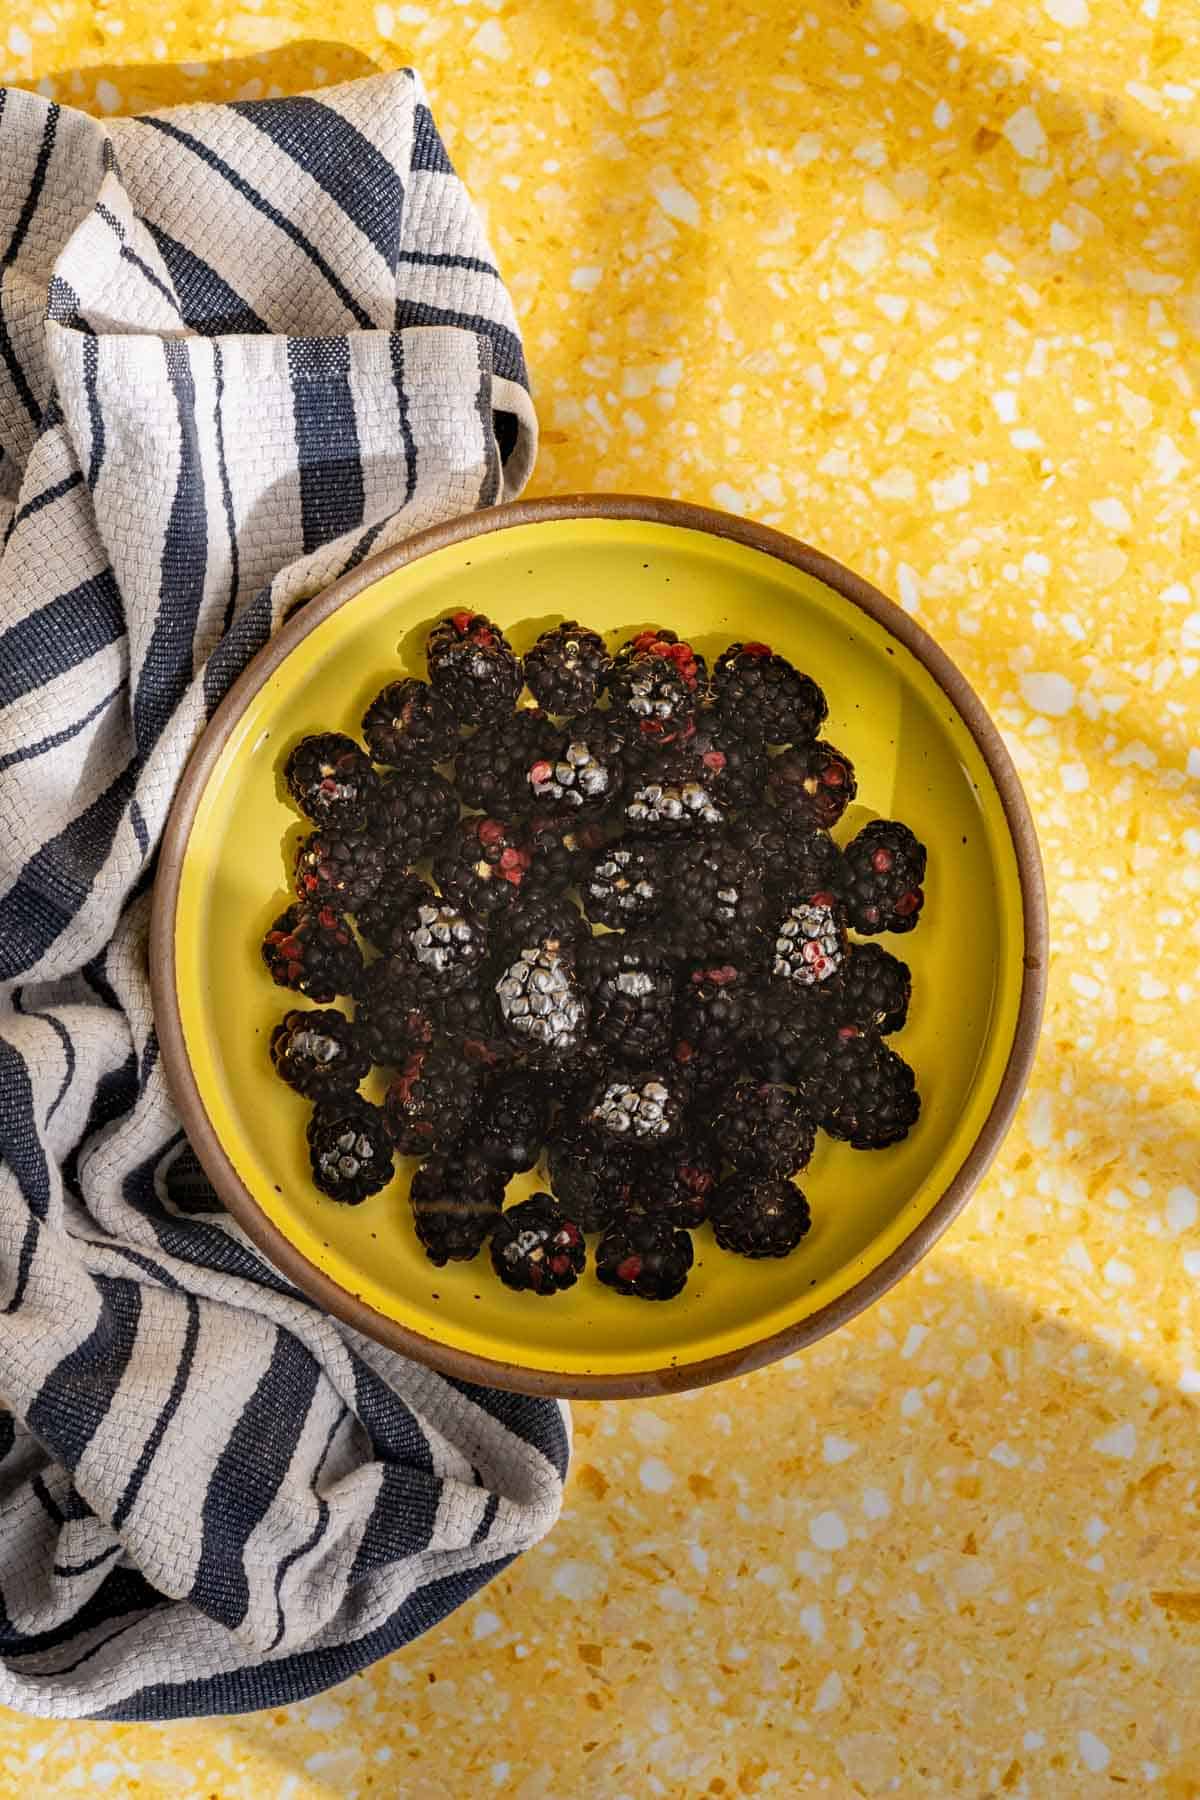 Washing blackberries in a yellow ceramic bowl.